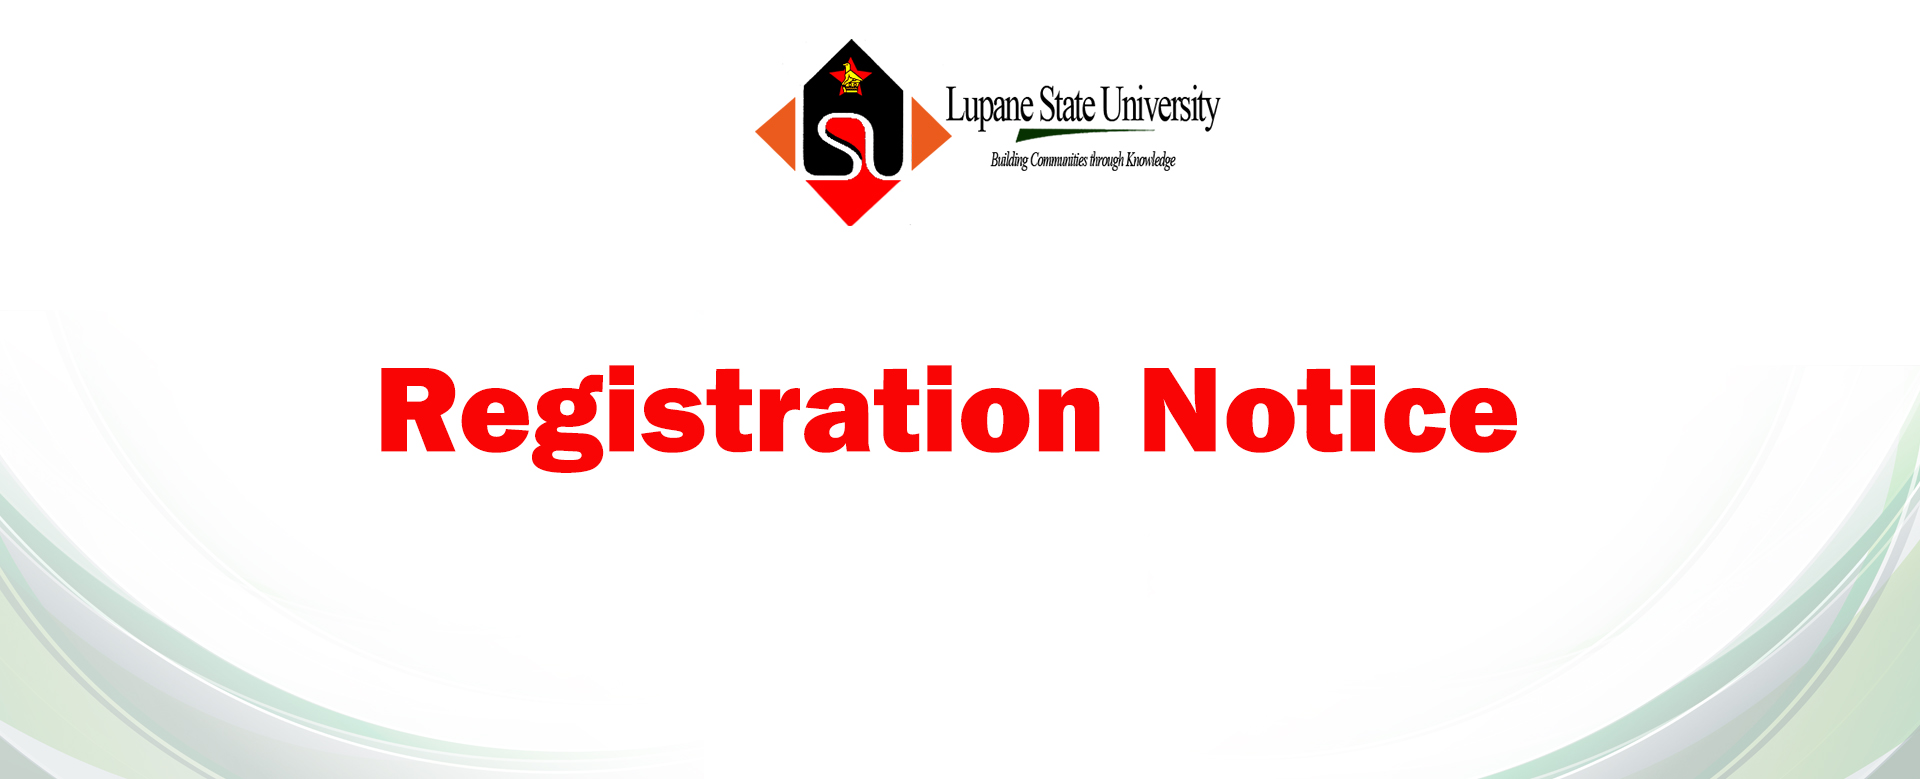 Registration Notice